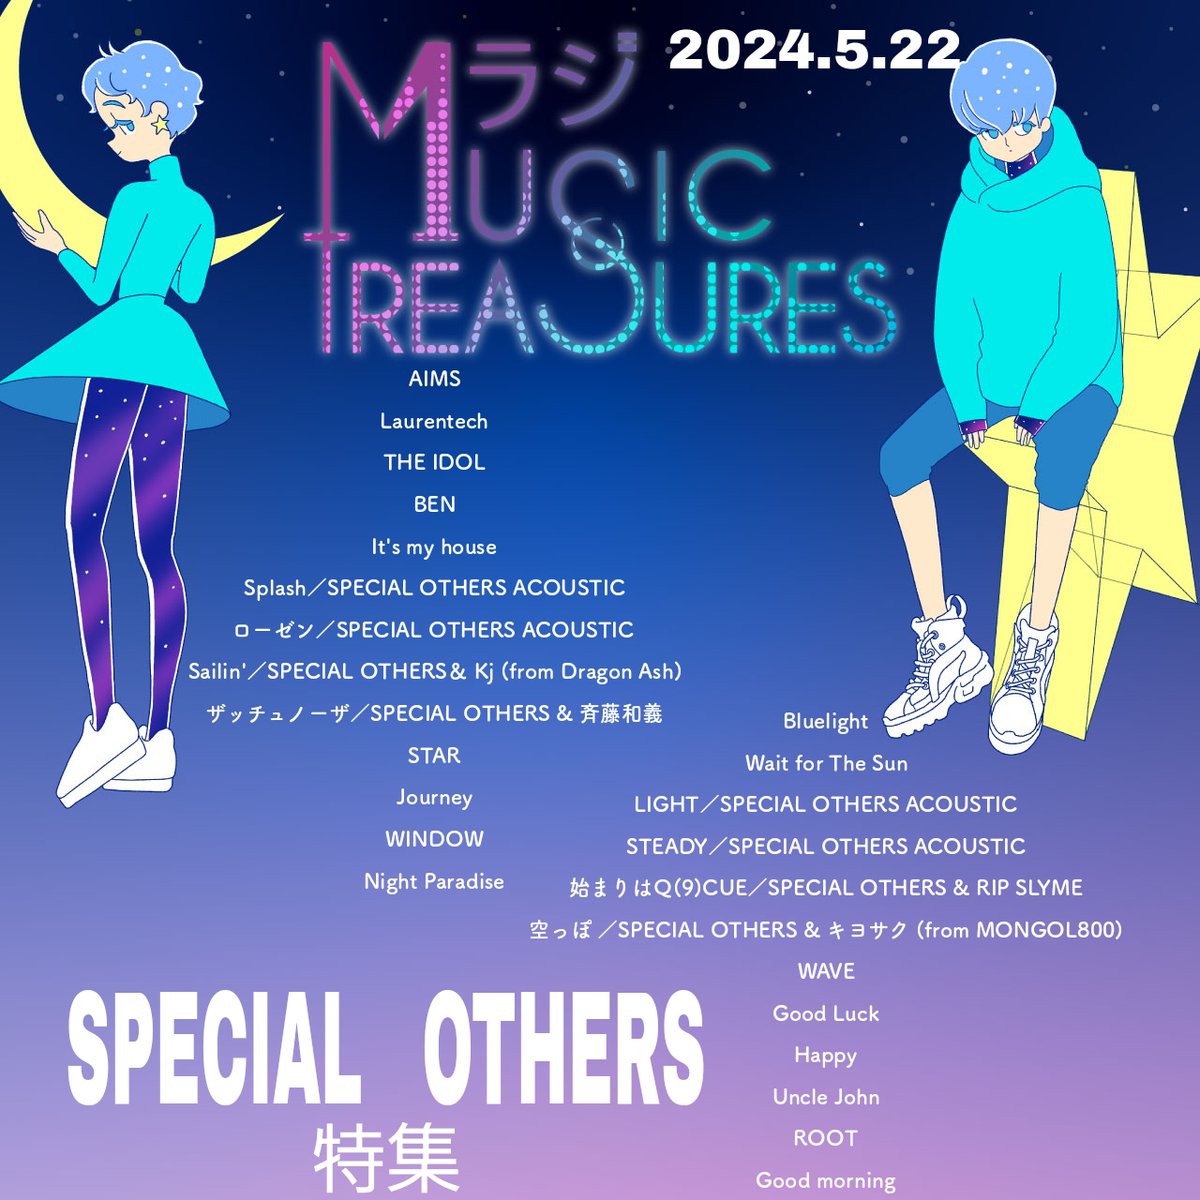 #MBSラジオ🦁Music Treasures　

☺︎──────────☺︎
　　 𝗦𝗣𝗘𝗖𝗜𝗔𝗟 𝗢𝗧𝗛𝗘𝗥𝗦 
               　 特集
　　⭐️165分25曲⭐️
☺︎──────────☺︎

#ミュートレ
📻#radikoタイムフリー　
1⃣radiko.jp/share/?sid=MBS…
2⃣radiko.jp/share/?sid=MBS…
3⃣radiko.jp/share/?sid=MBS…